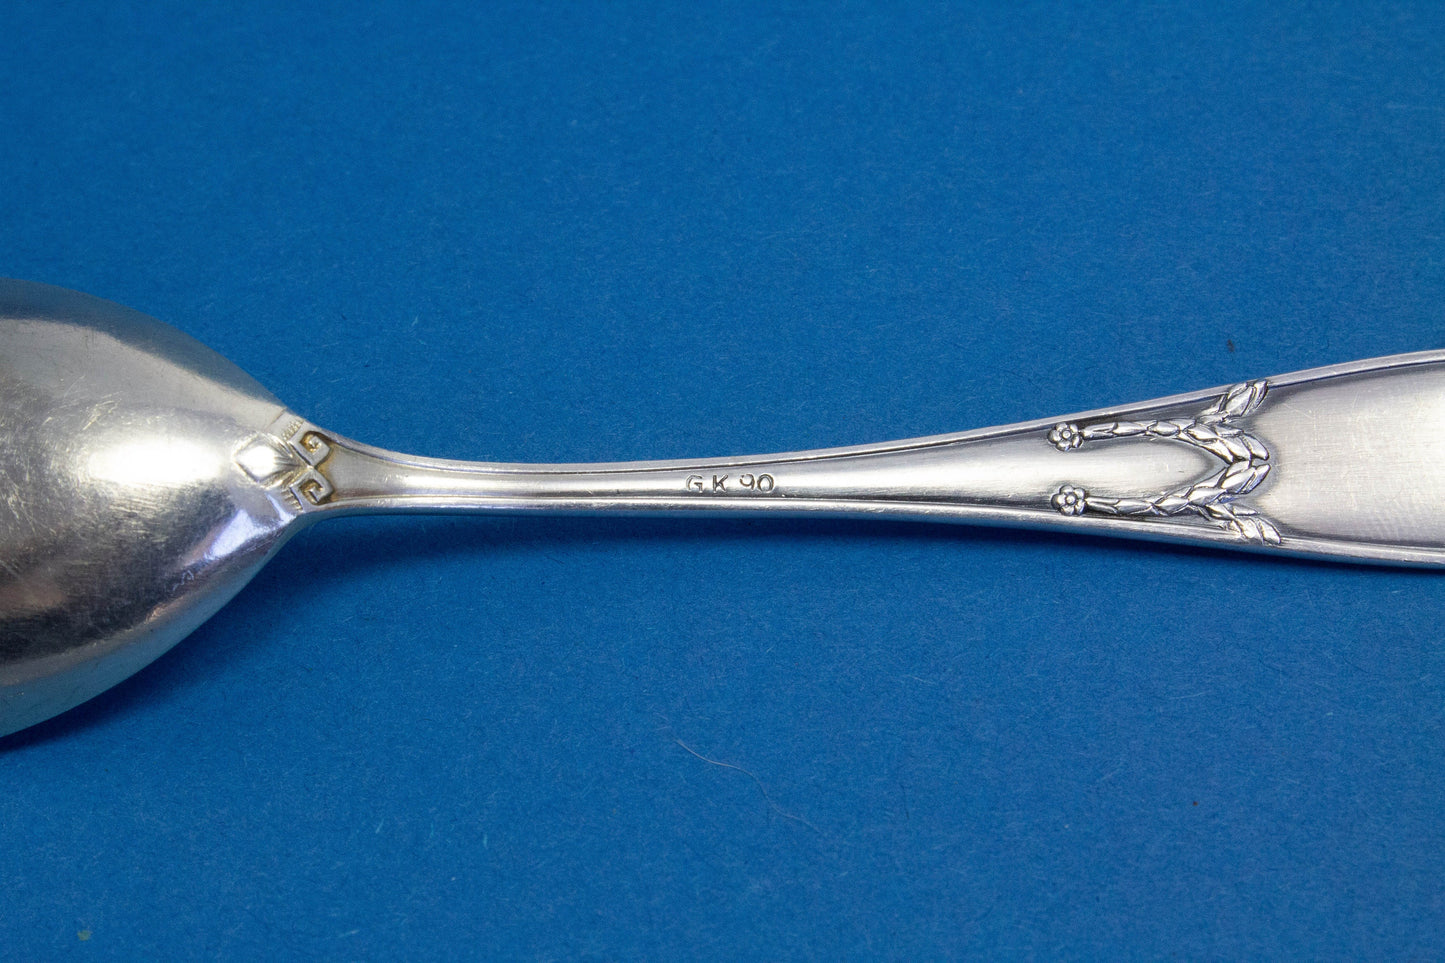 1 antique ice cream spoon from Köberlin, around 1900